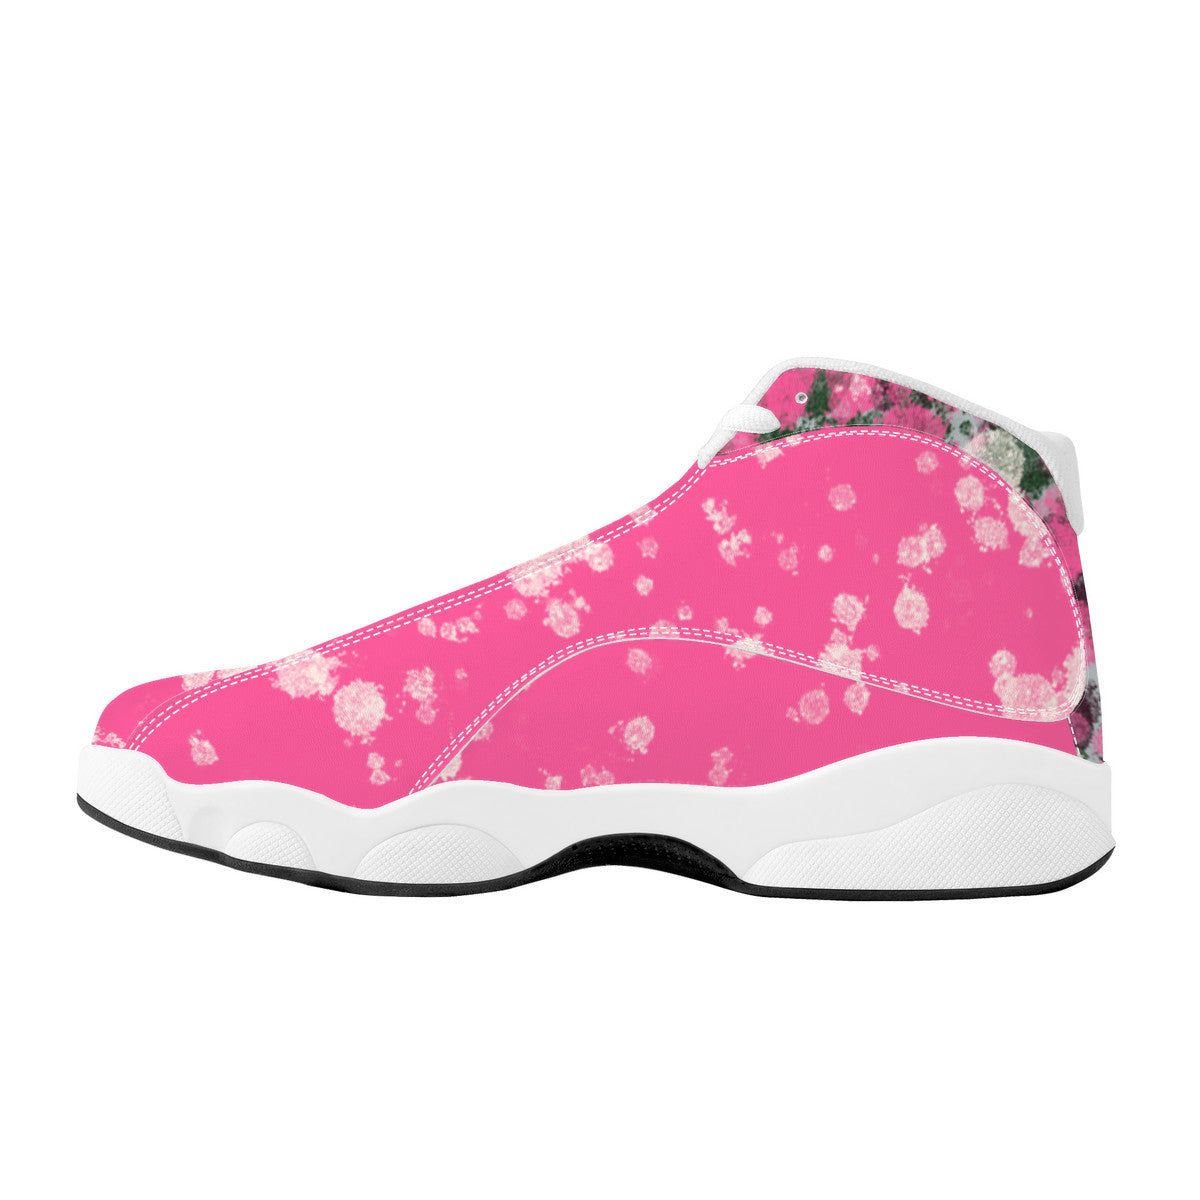 RVT Basketball Shoes - Pink Drip